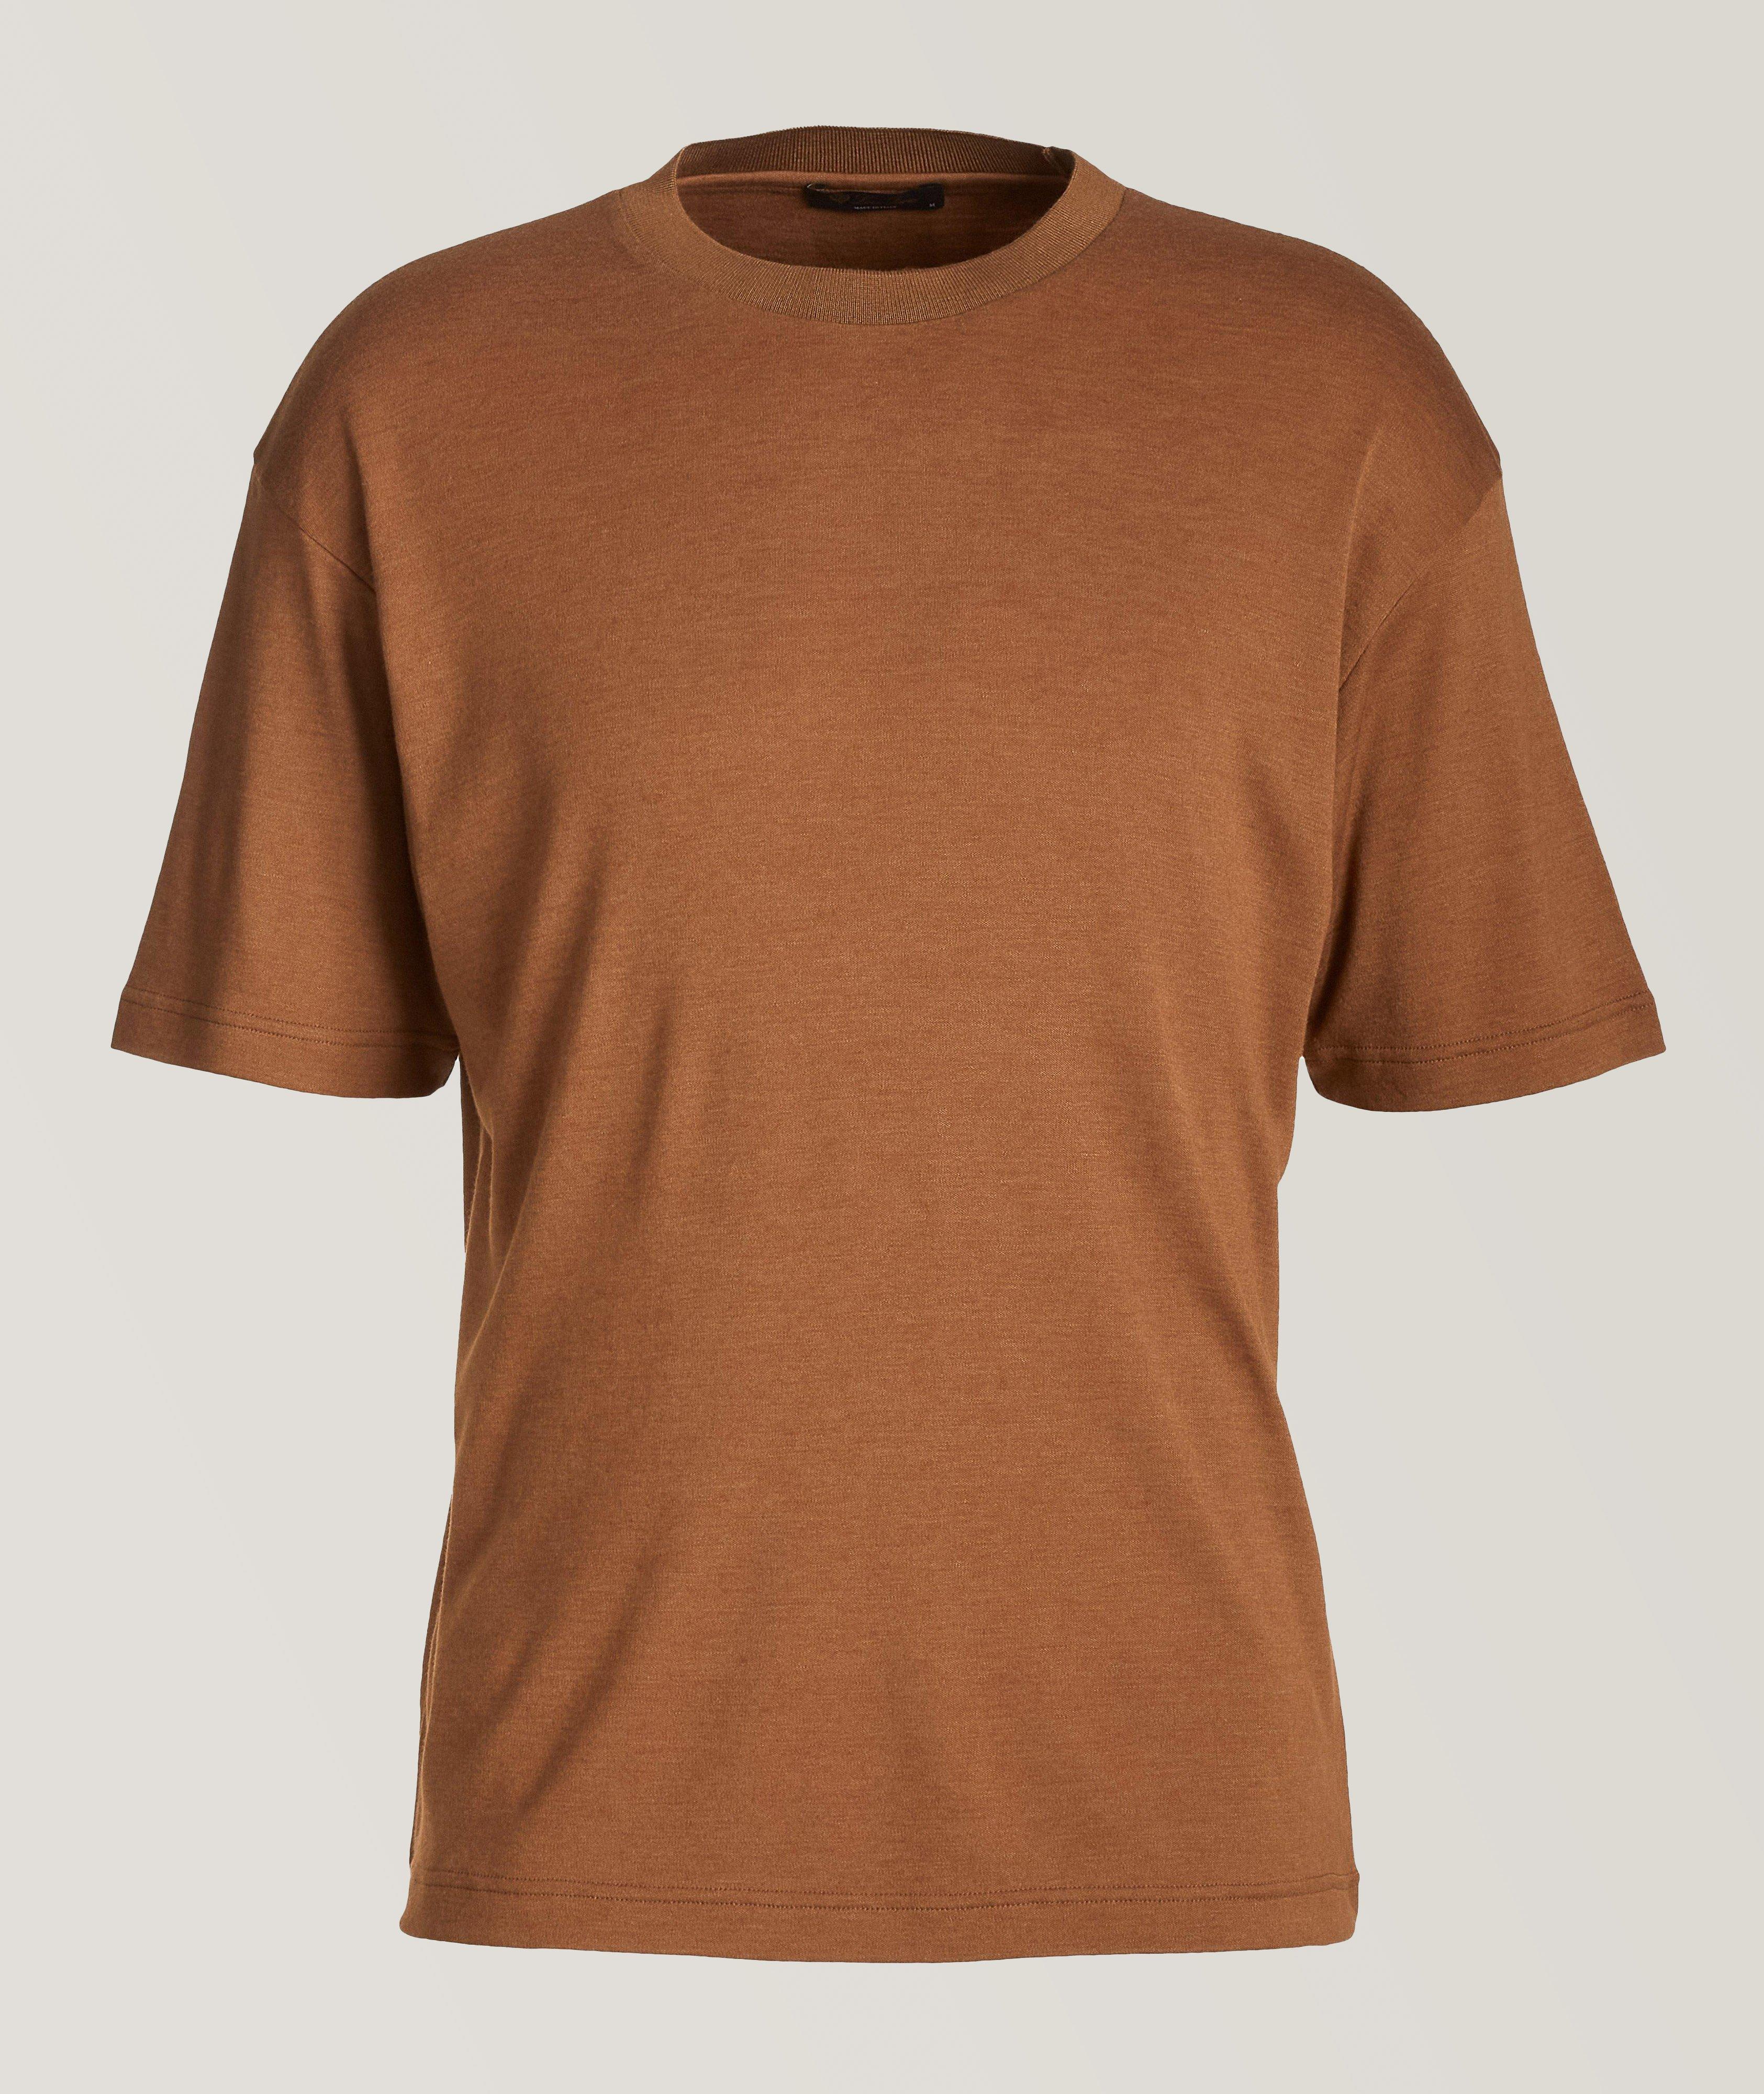 Philion Cashmere, Silk & Jersey T-Shirt image 0